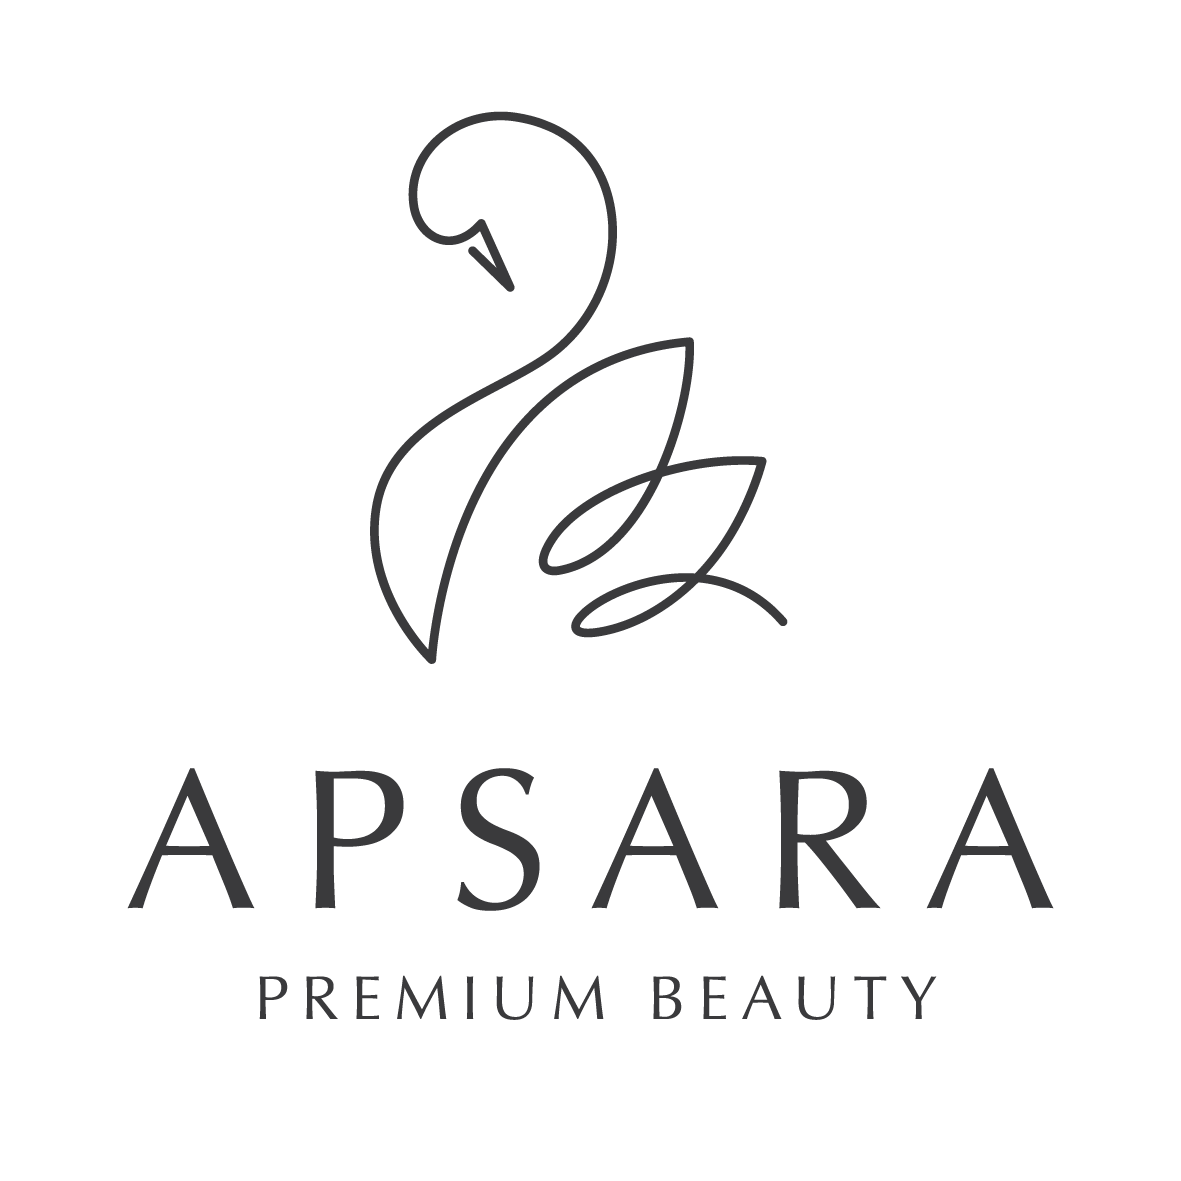 Apsara logo hi-res stock photography and images - Alamy